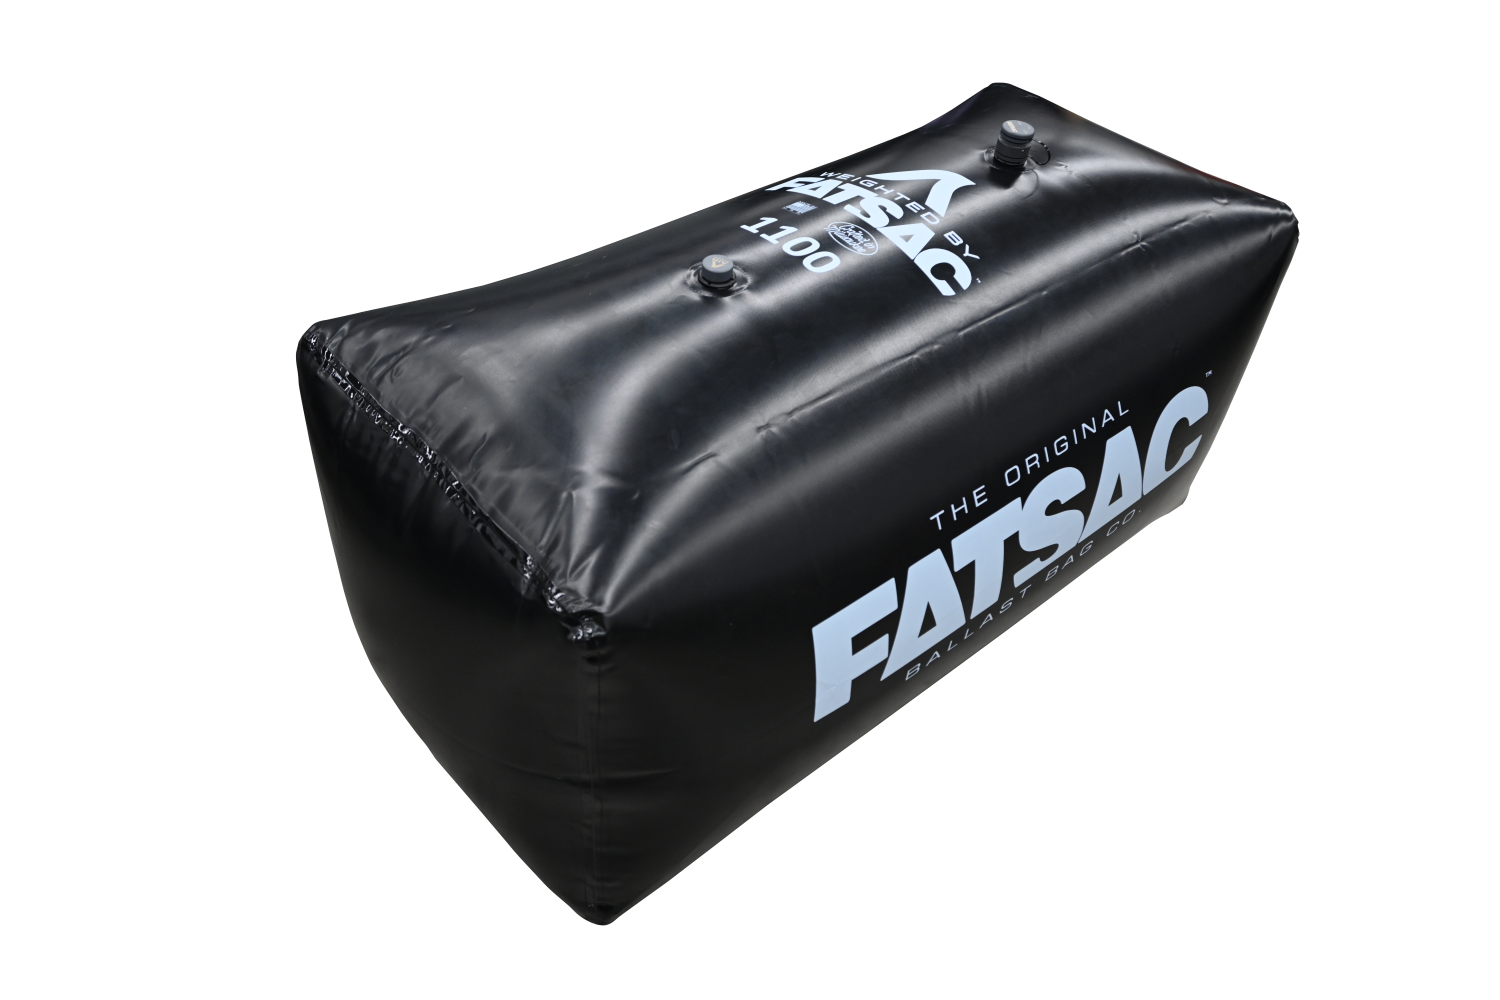 FatSac Fillable Weight Bag (55-95 lbs)